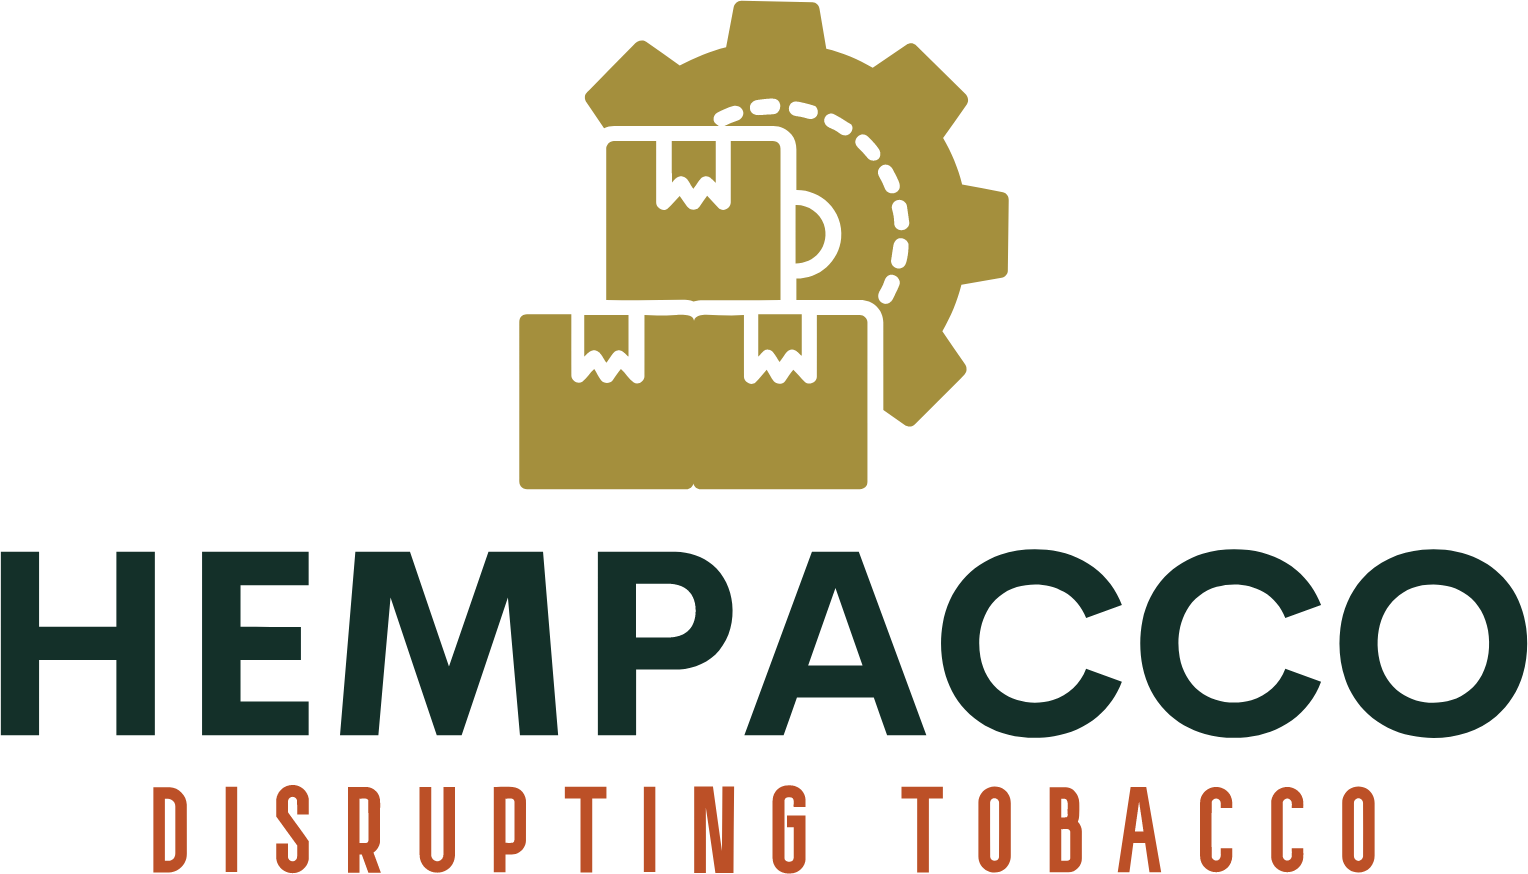 Hempacco Co., Inc. | Transaction History